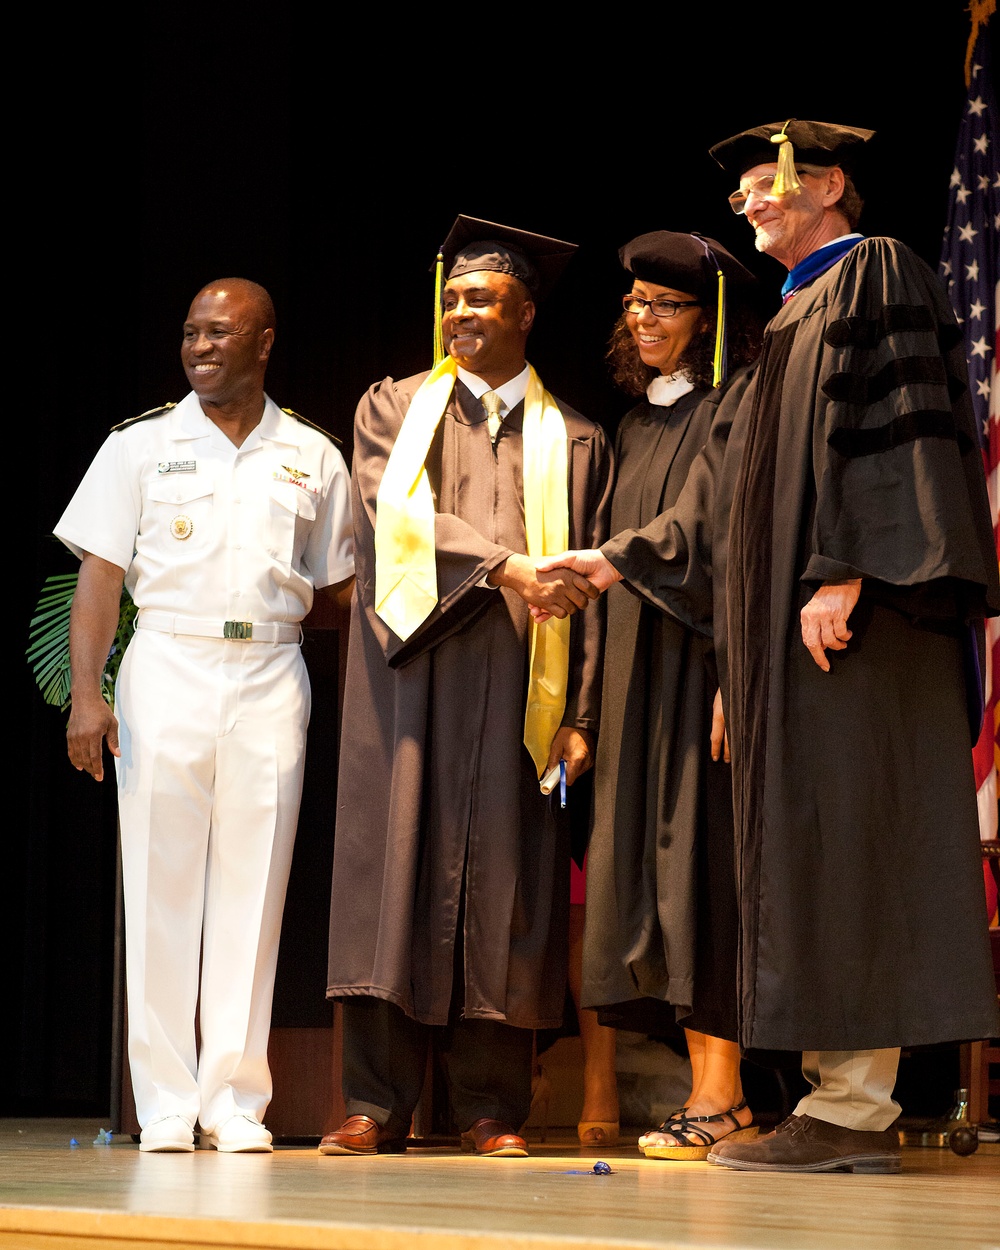 MARCENT (Fwd) Marine receives diploma in Bahrain